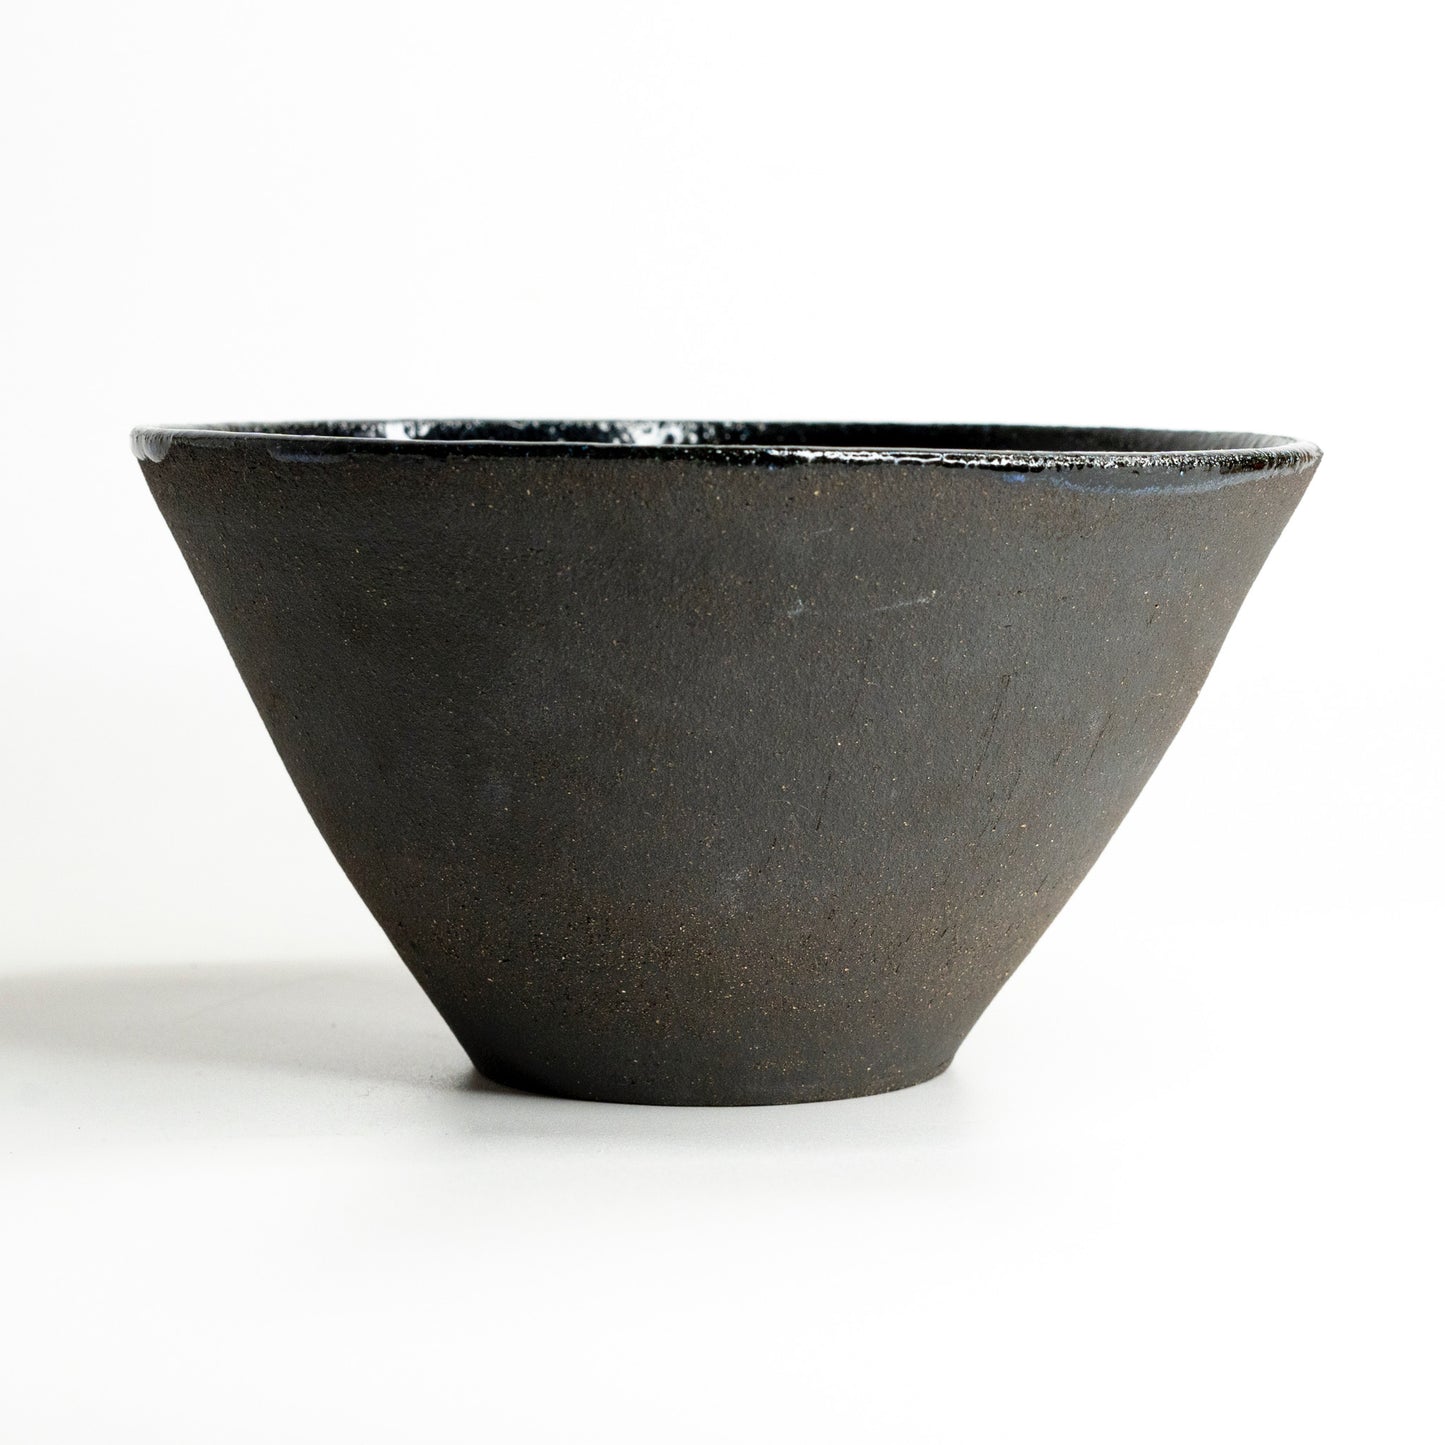 Blue-black bowl